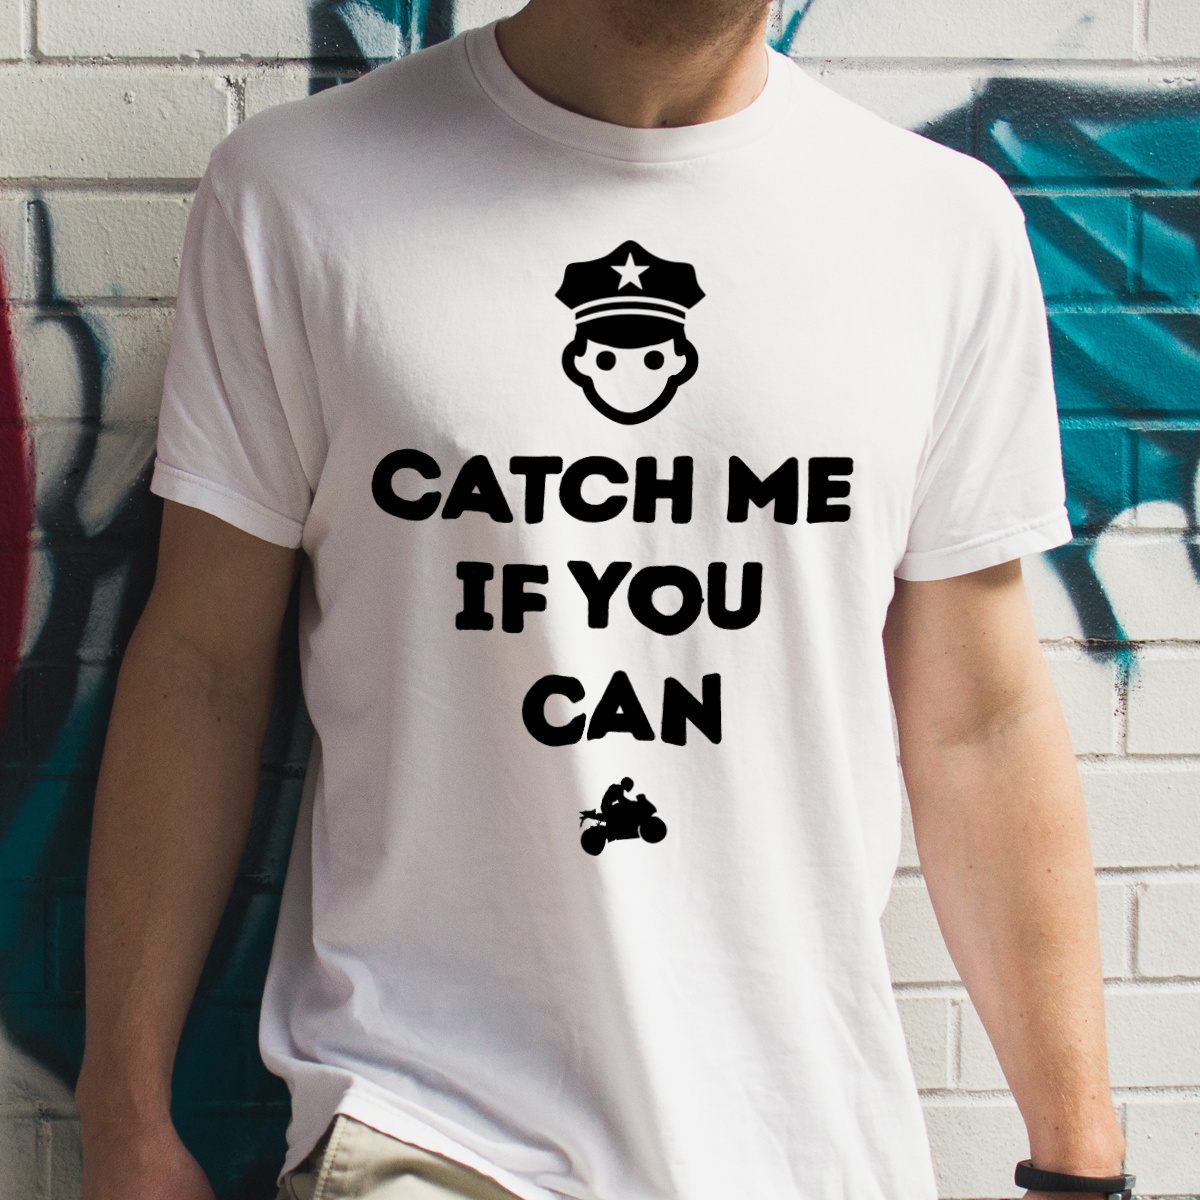 Catch Me If You Can - Męska Koszulka Biała